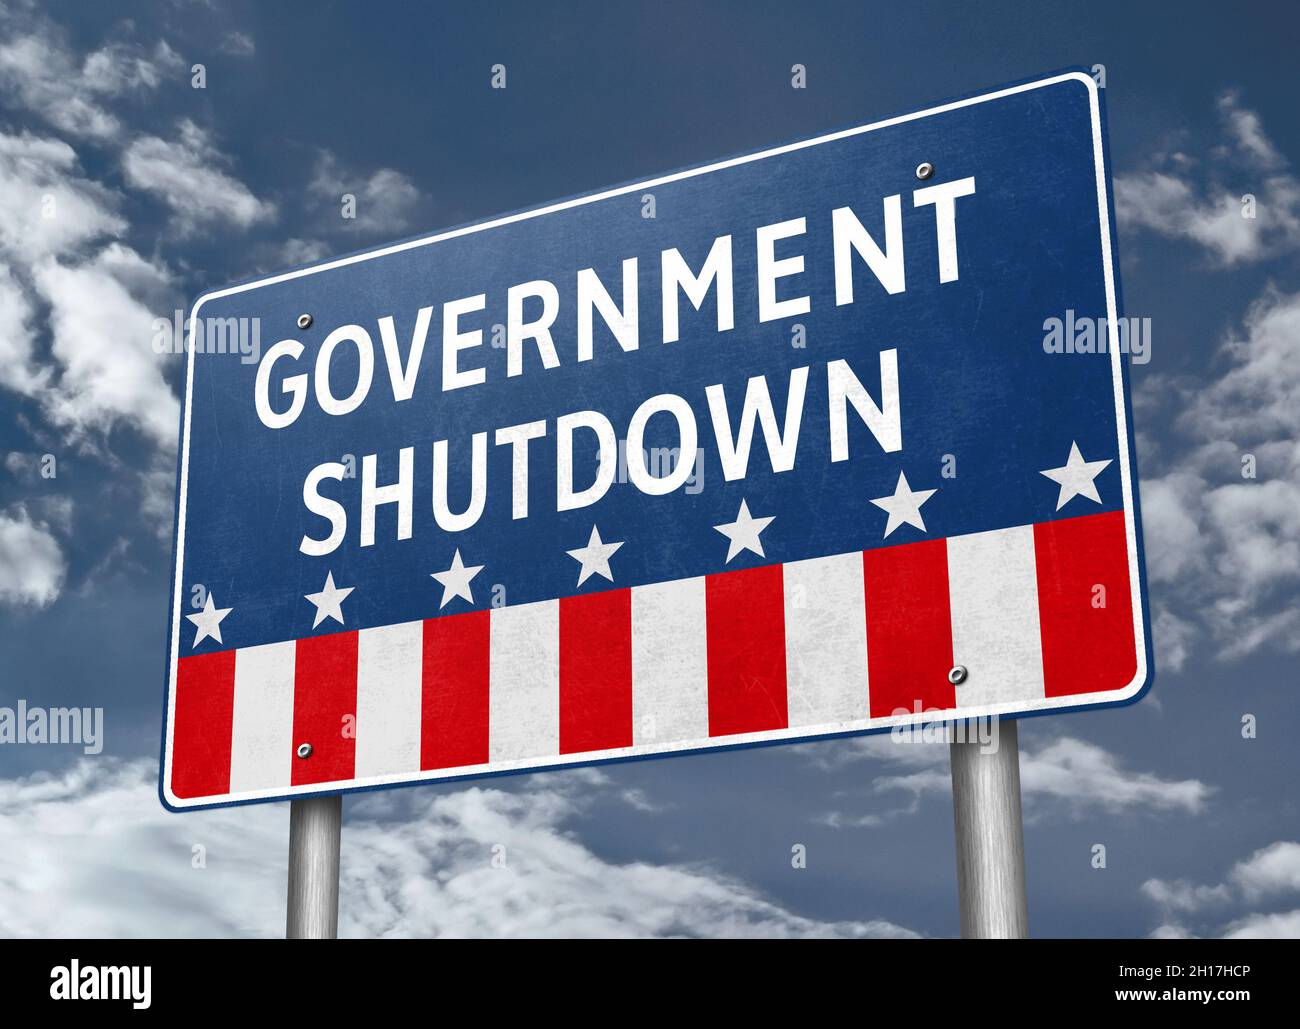 Government Shutdown - road sign illustration Stock Photo